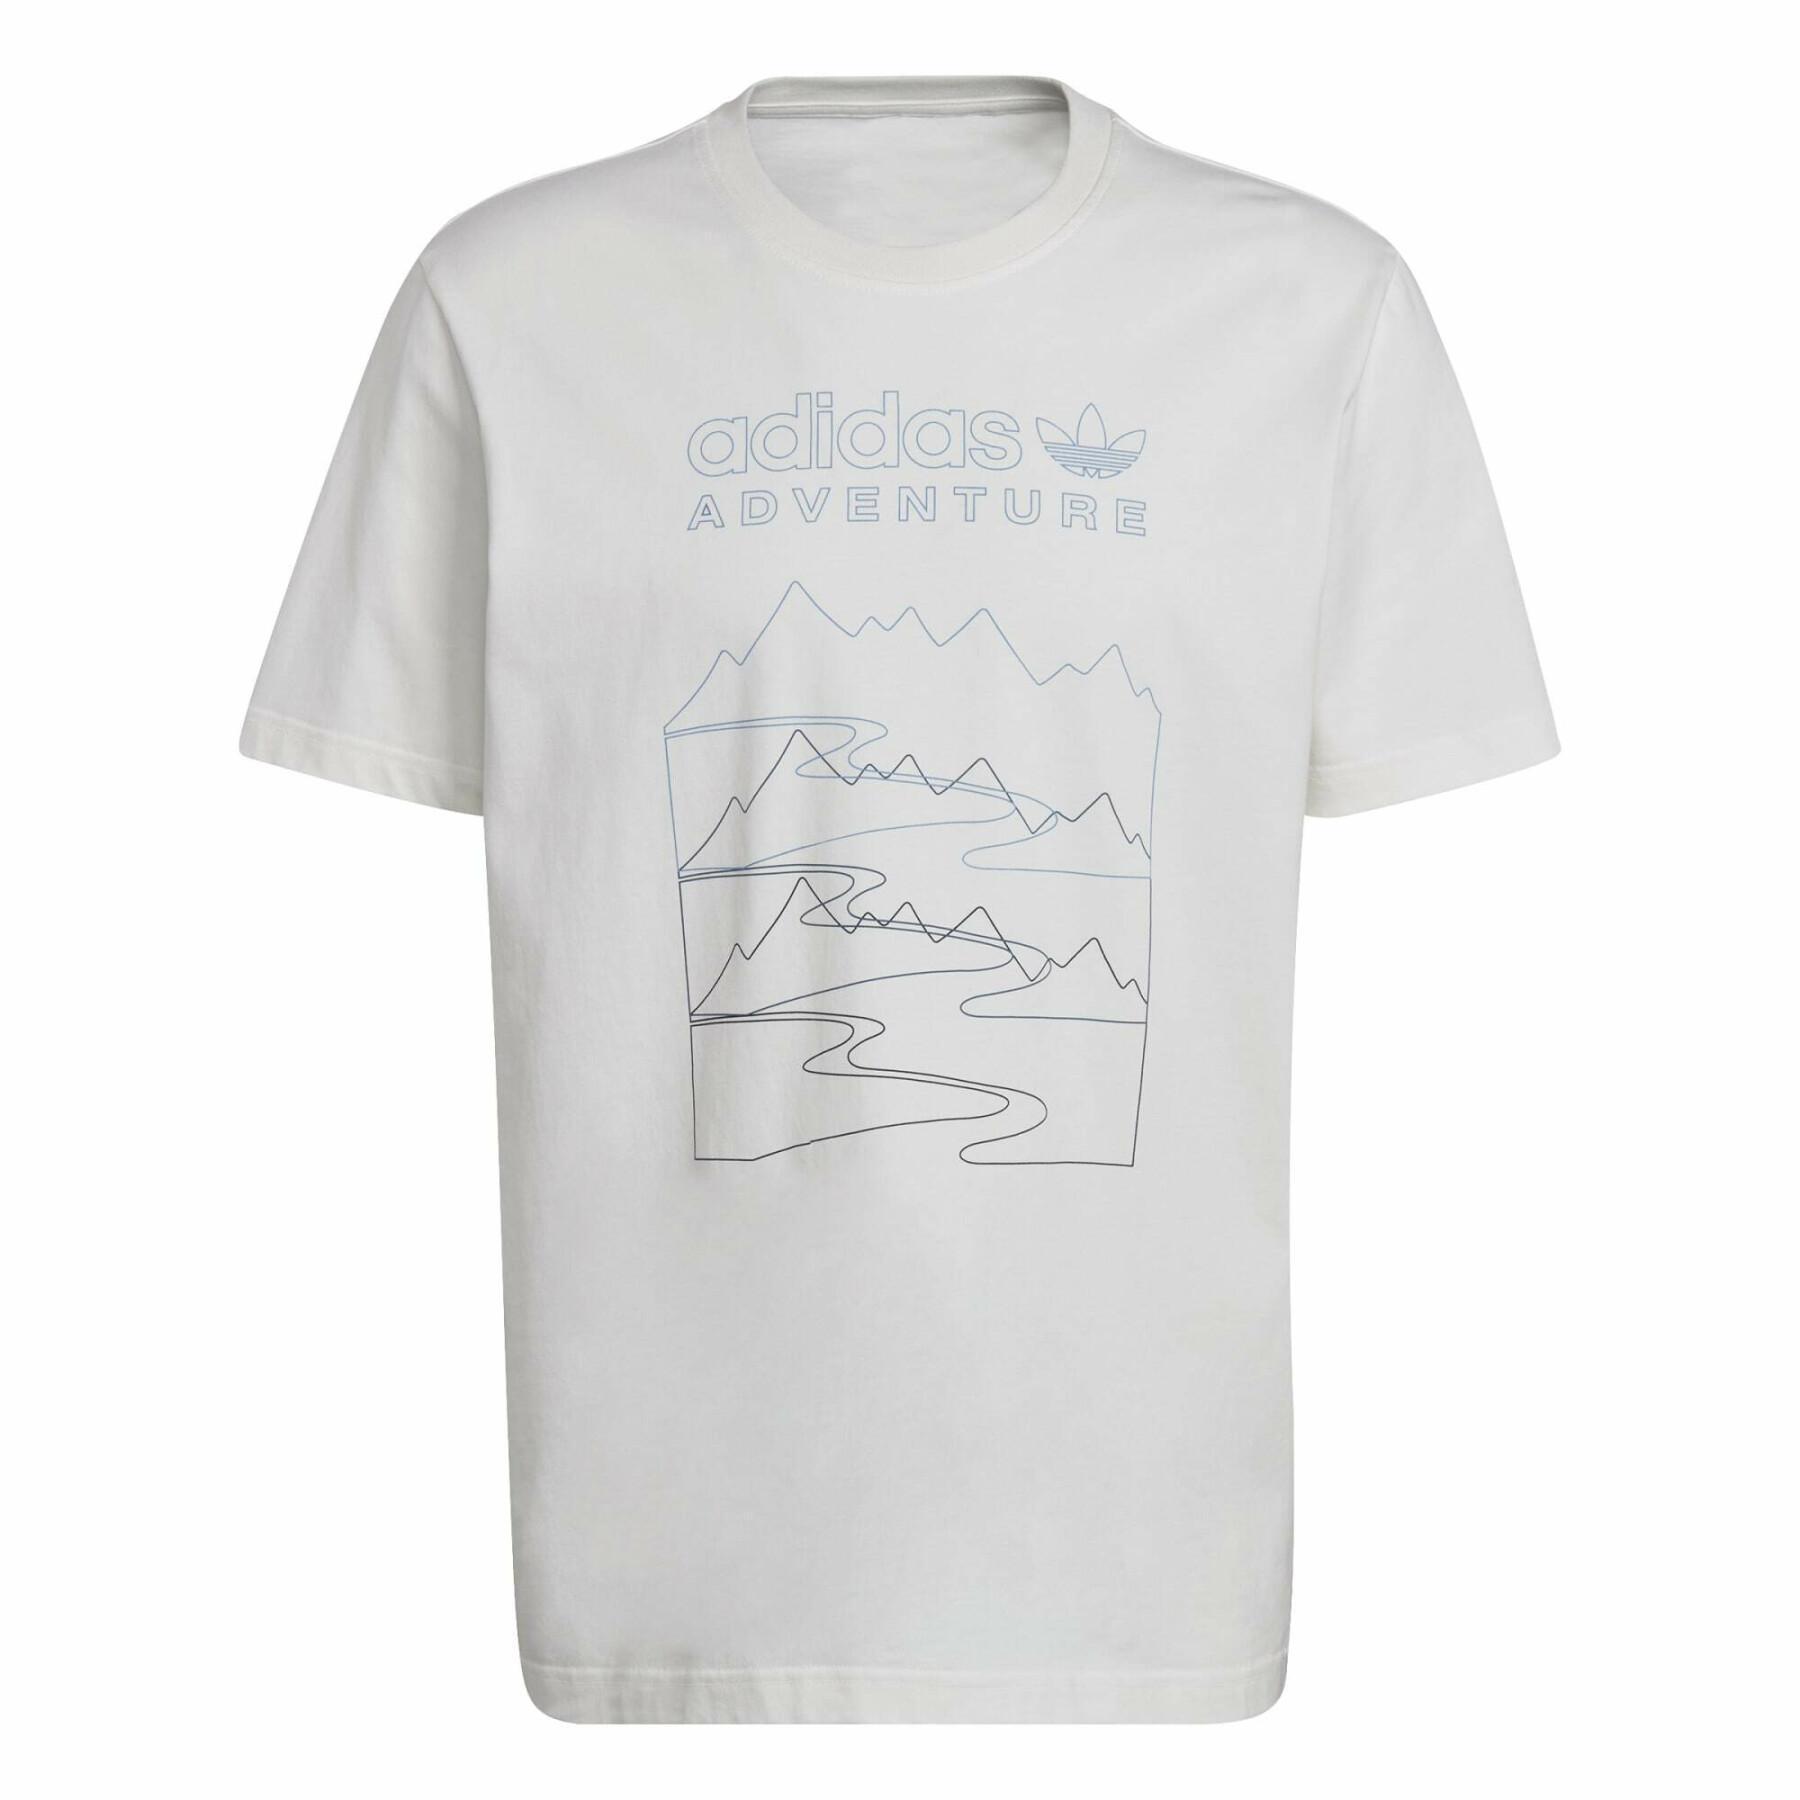 T-shirt adidas Originals Adventure Mountain Front